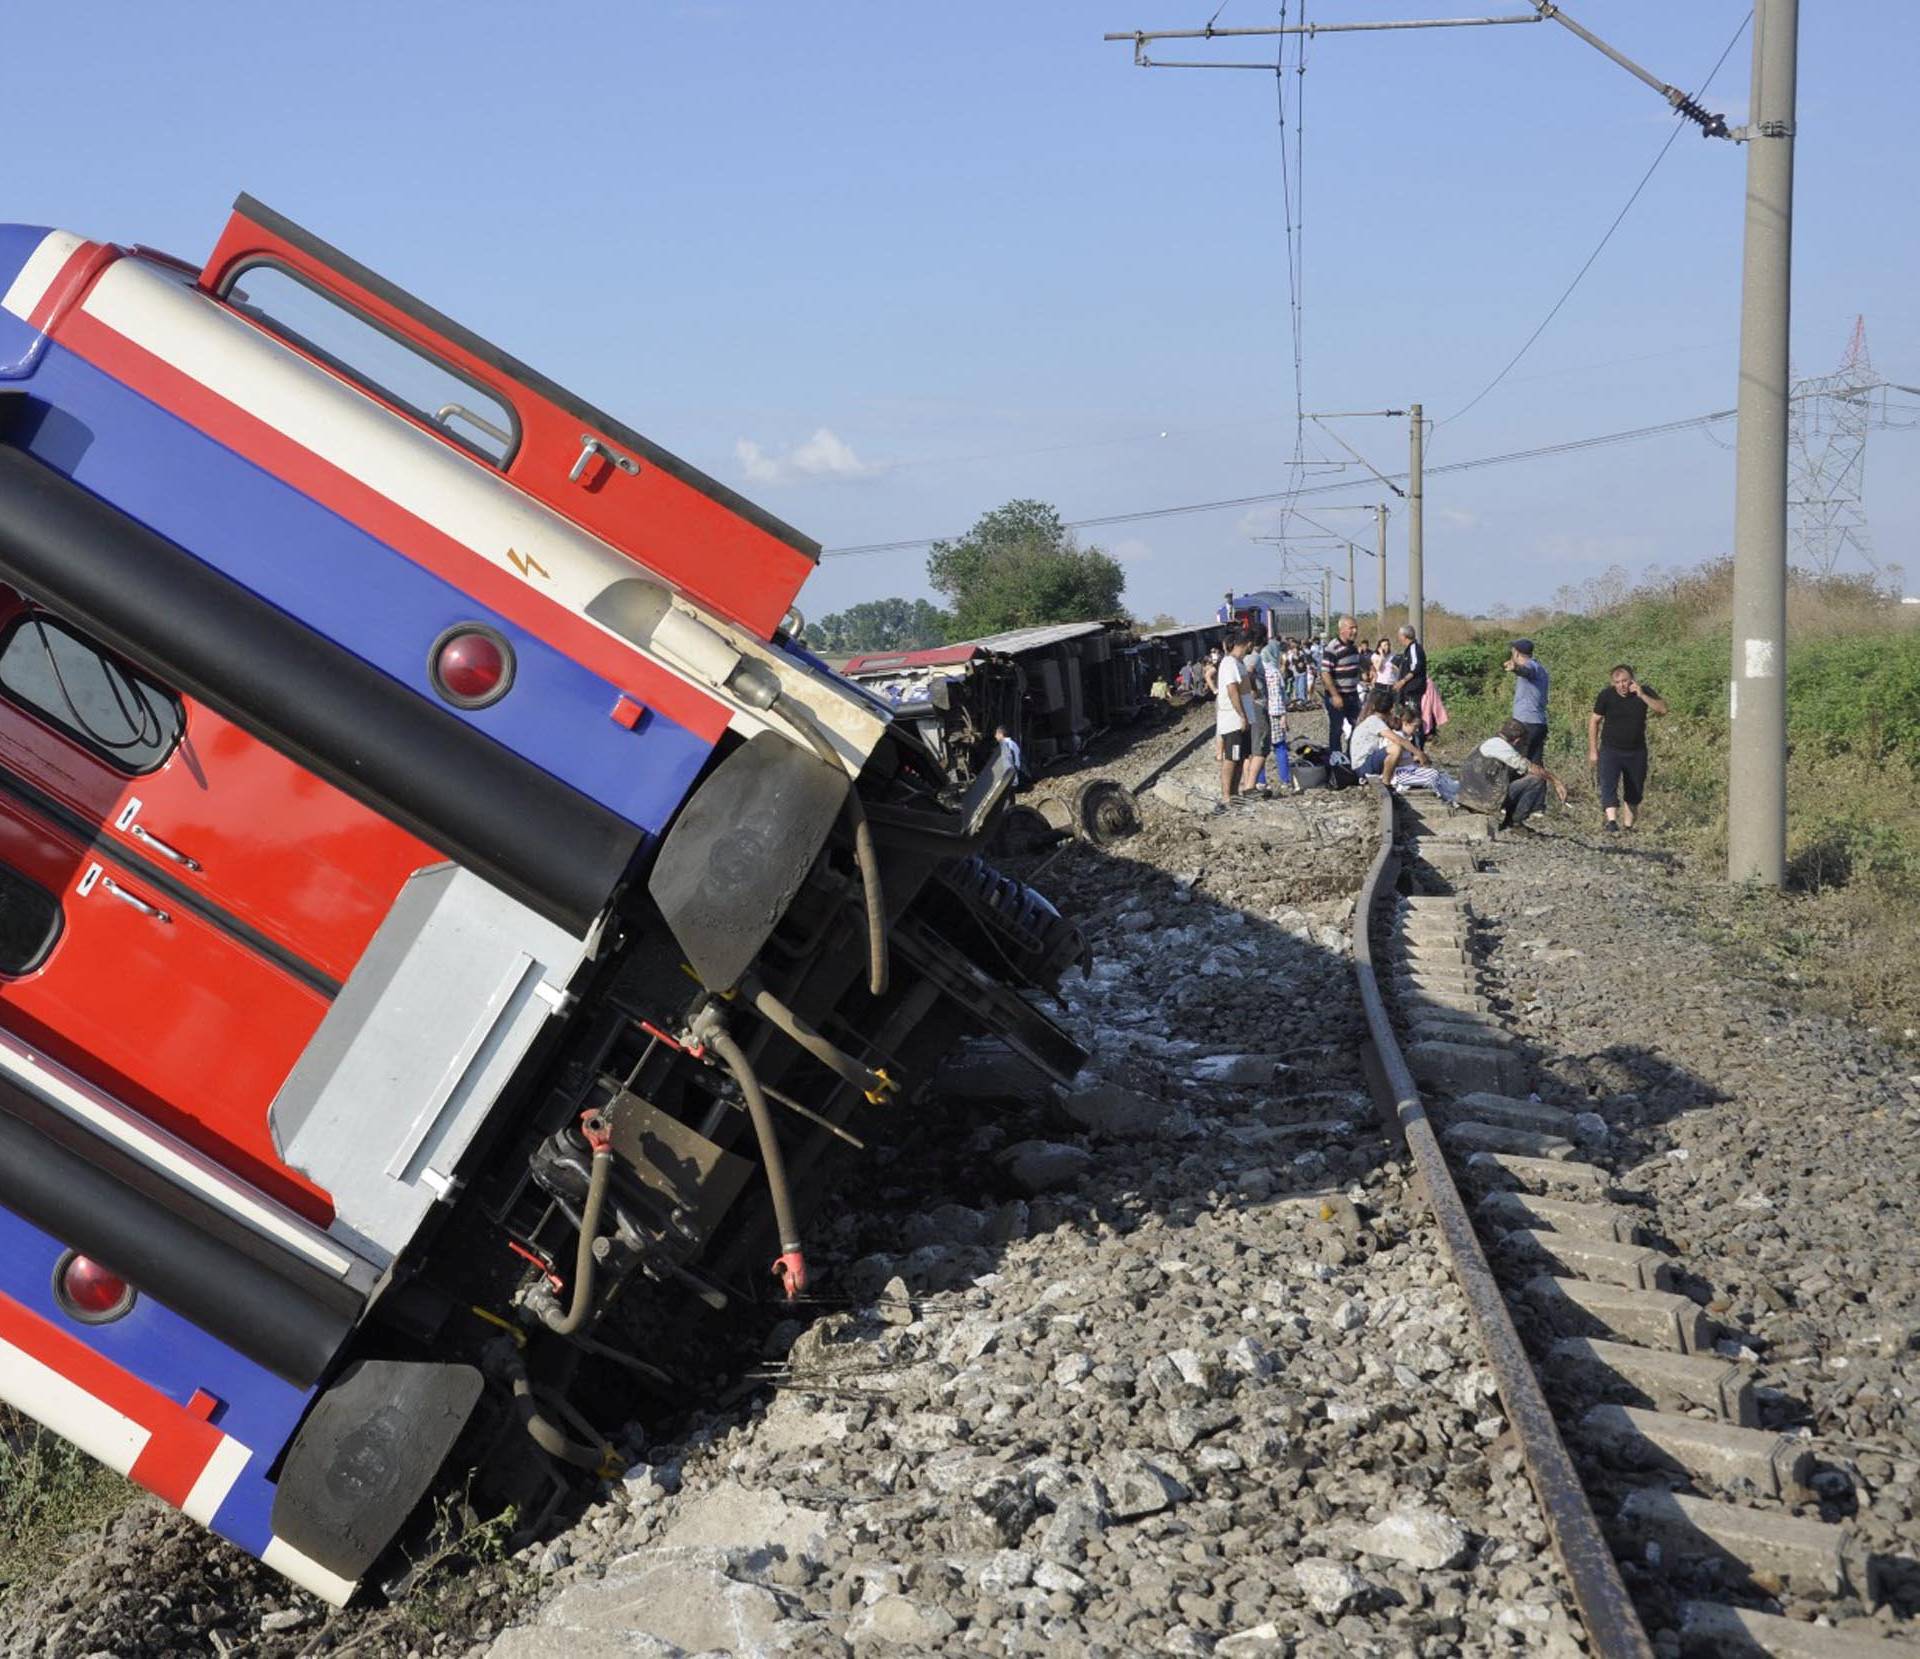 A derailed train is seen near Corlu in Tekirdag province